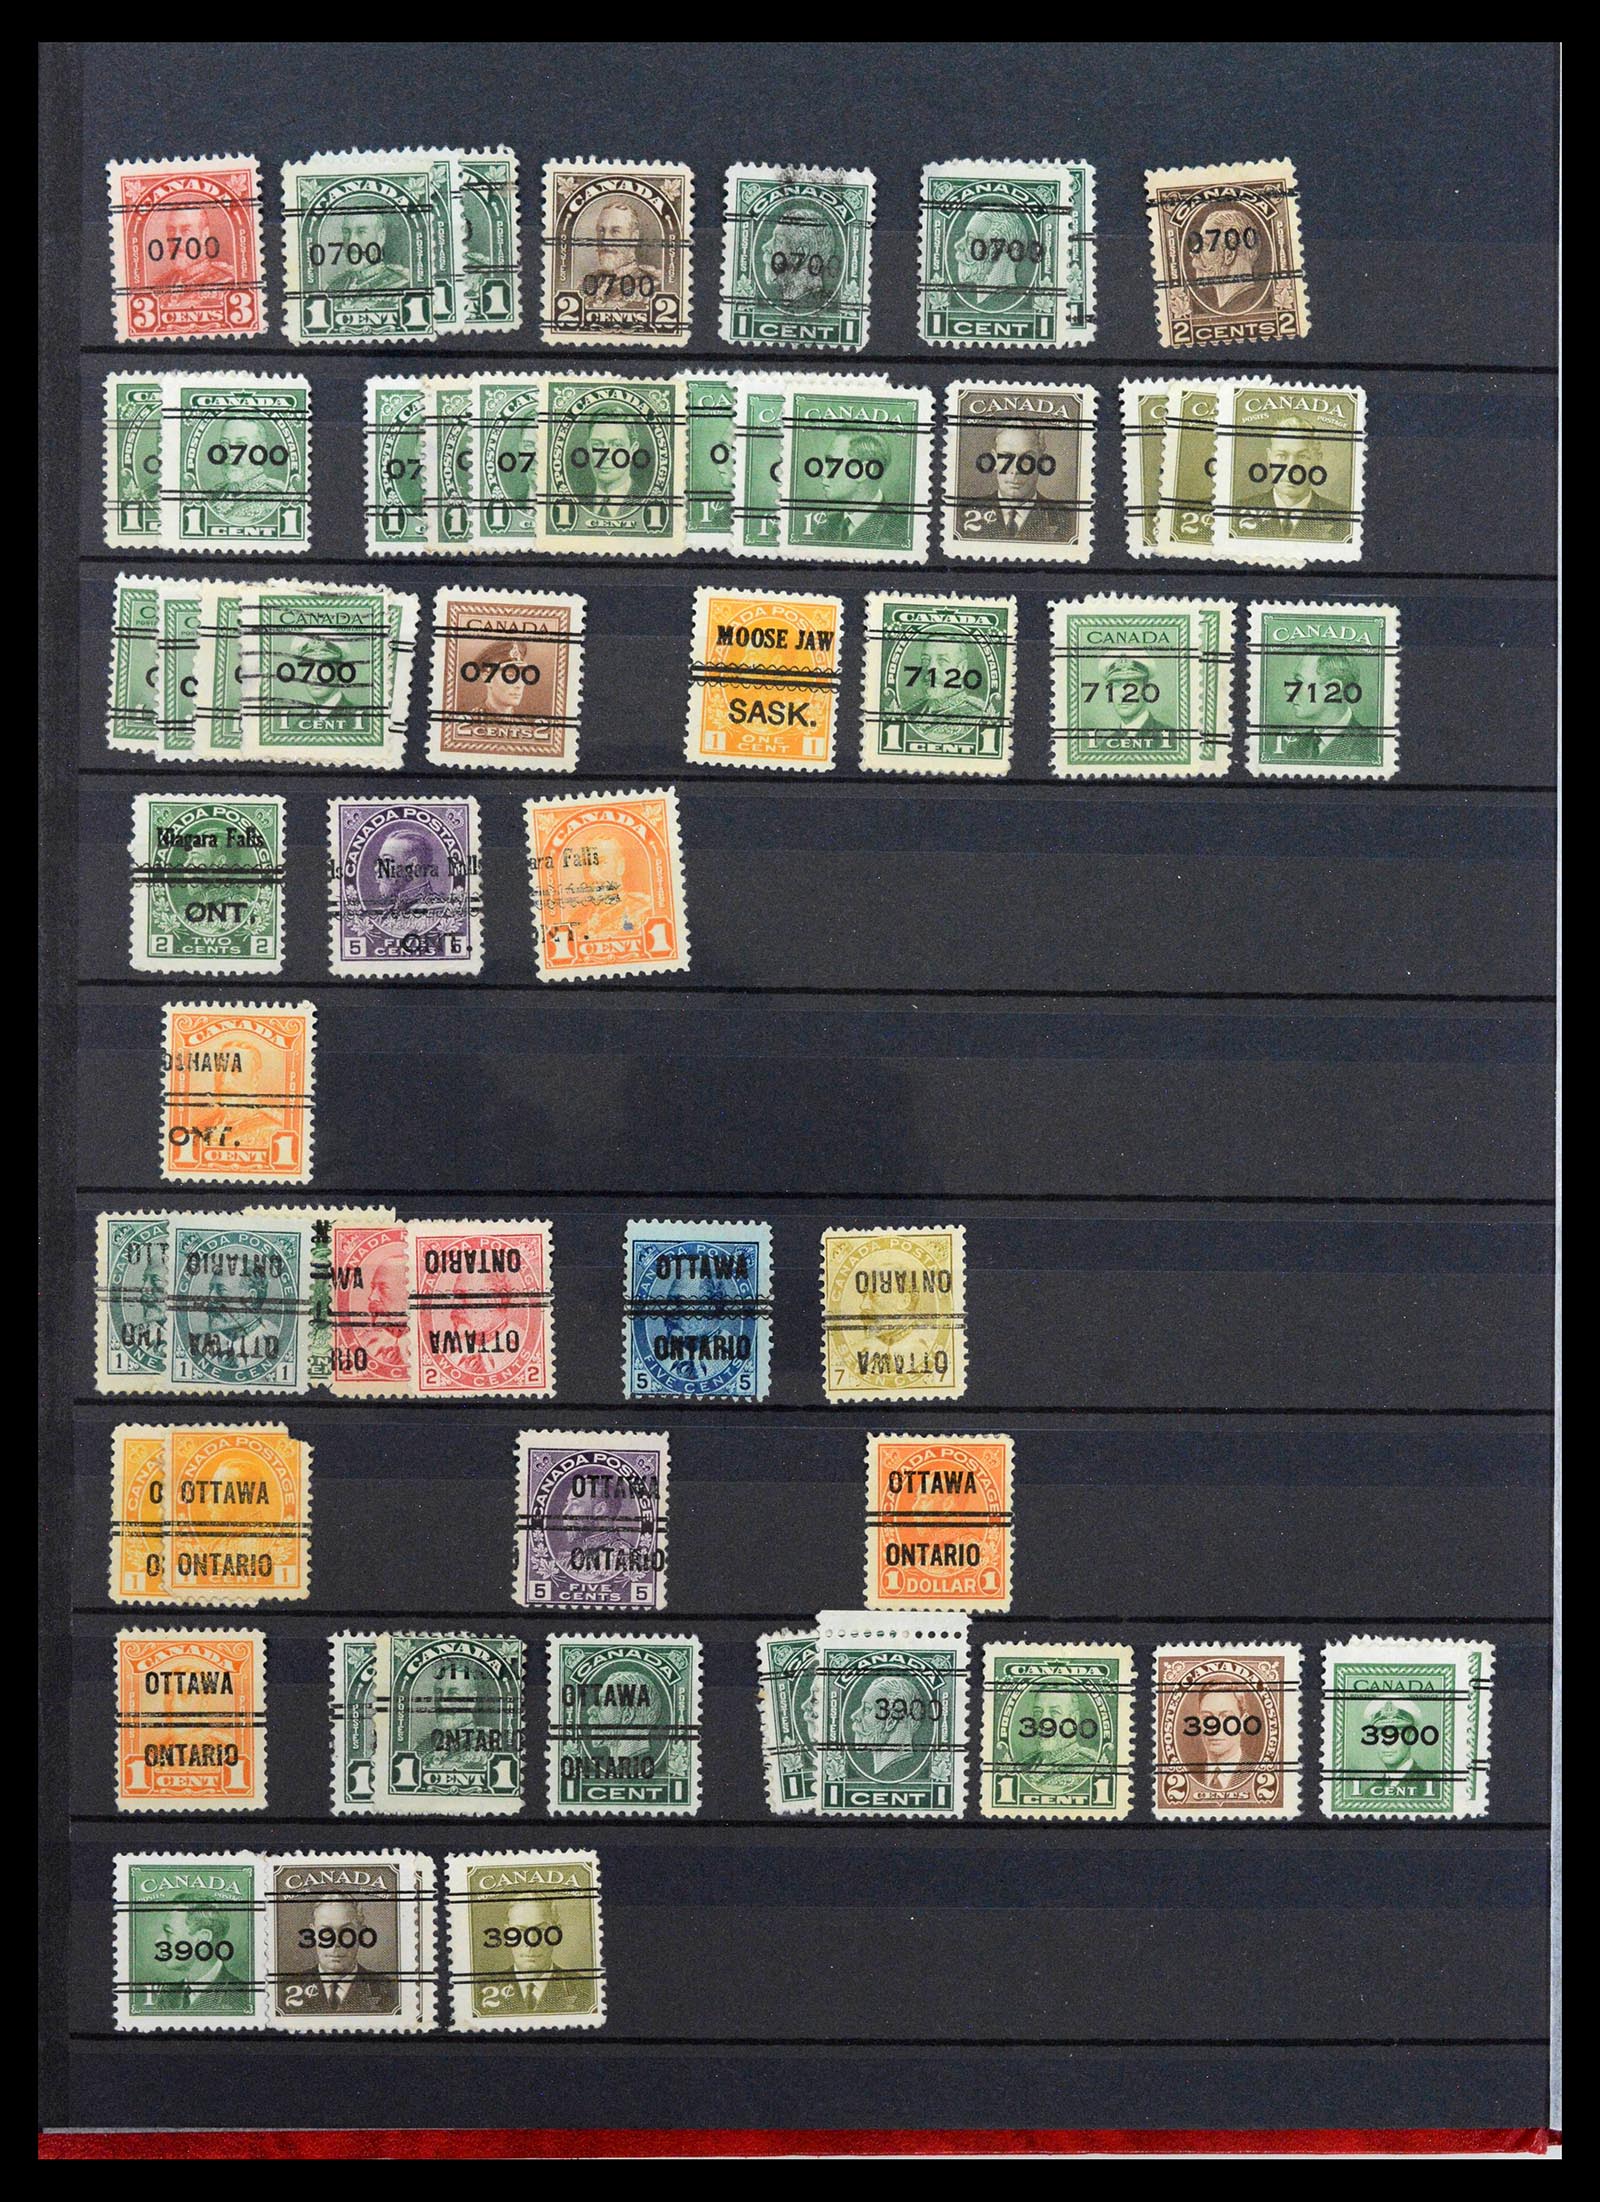 39484 0008 - Stamp collection 39484 Canada precancels 1880-1970.